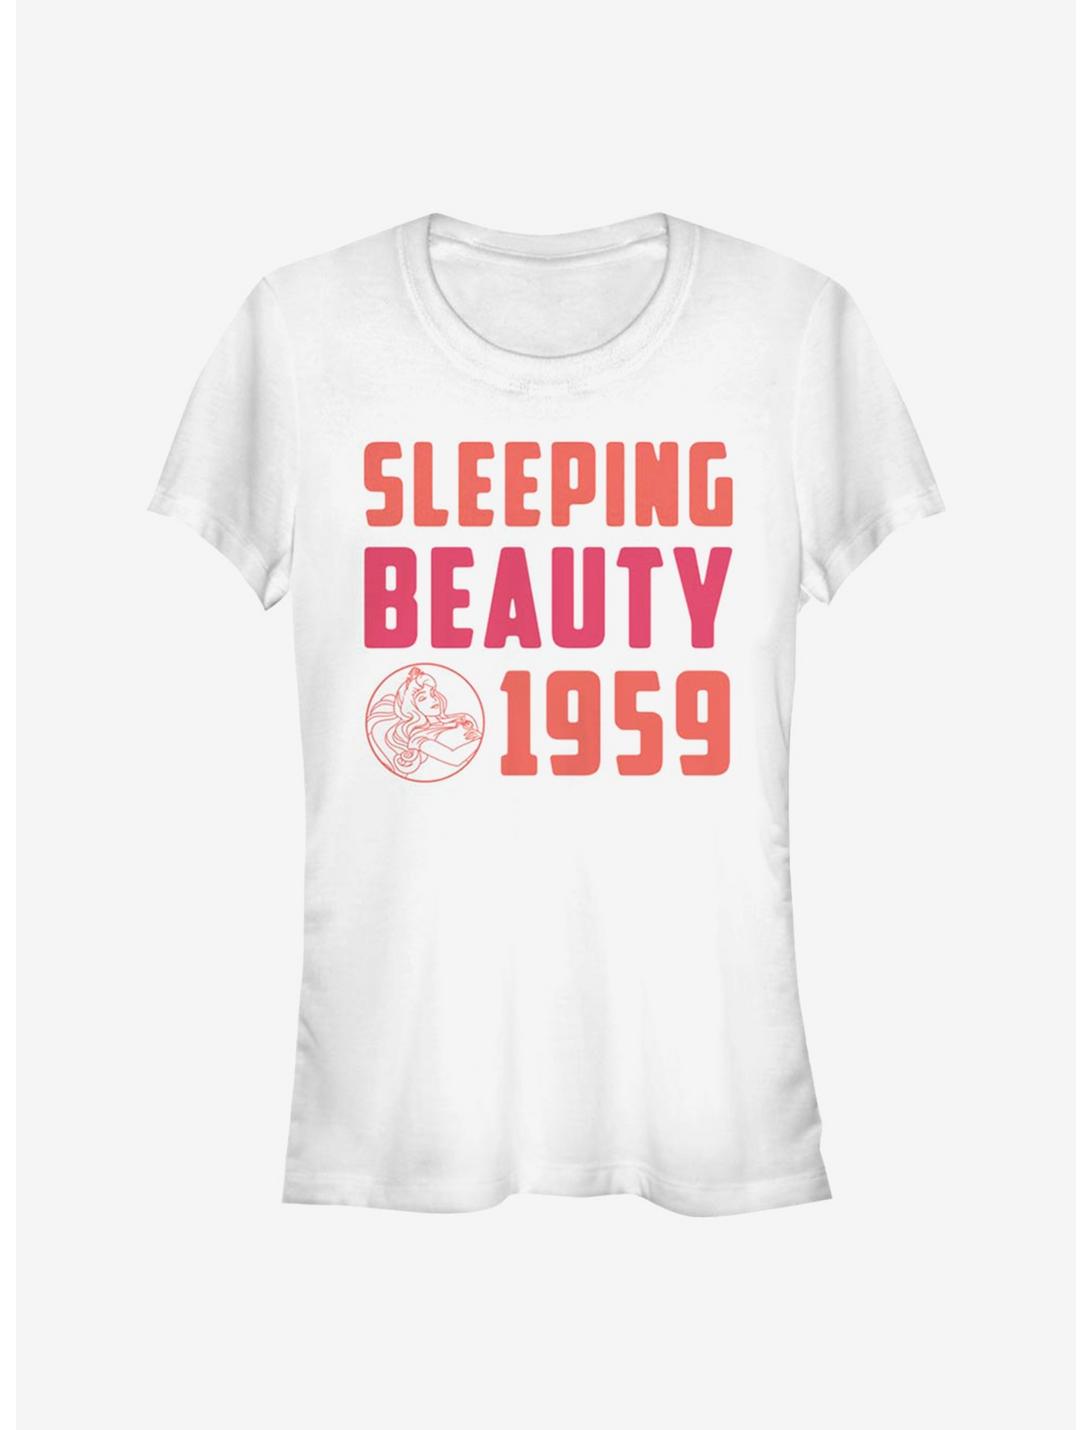 Disney Sleeping Beauty 1959 Girls T-Shirt, WHITE, hi-res